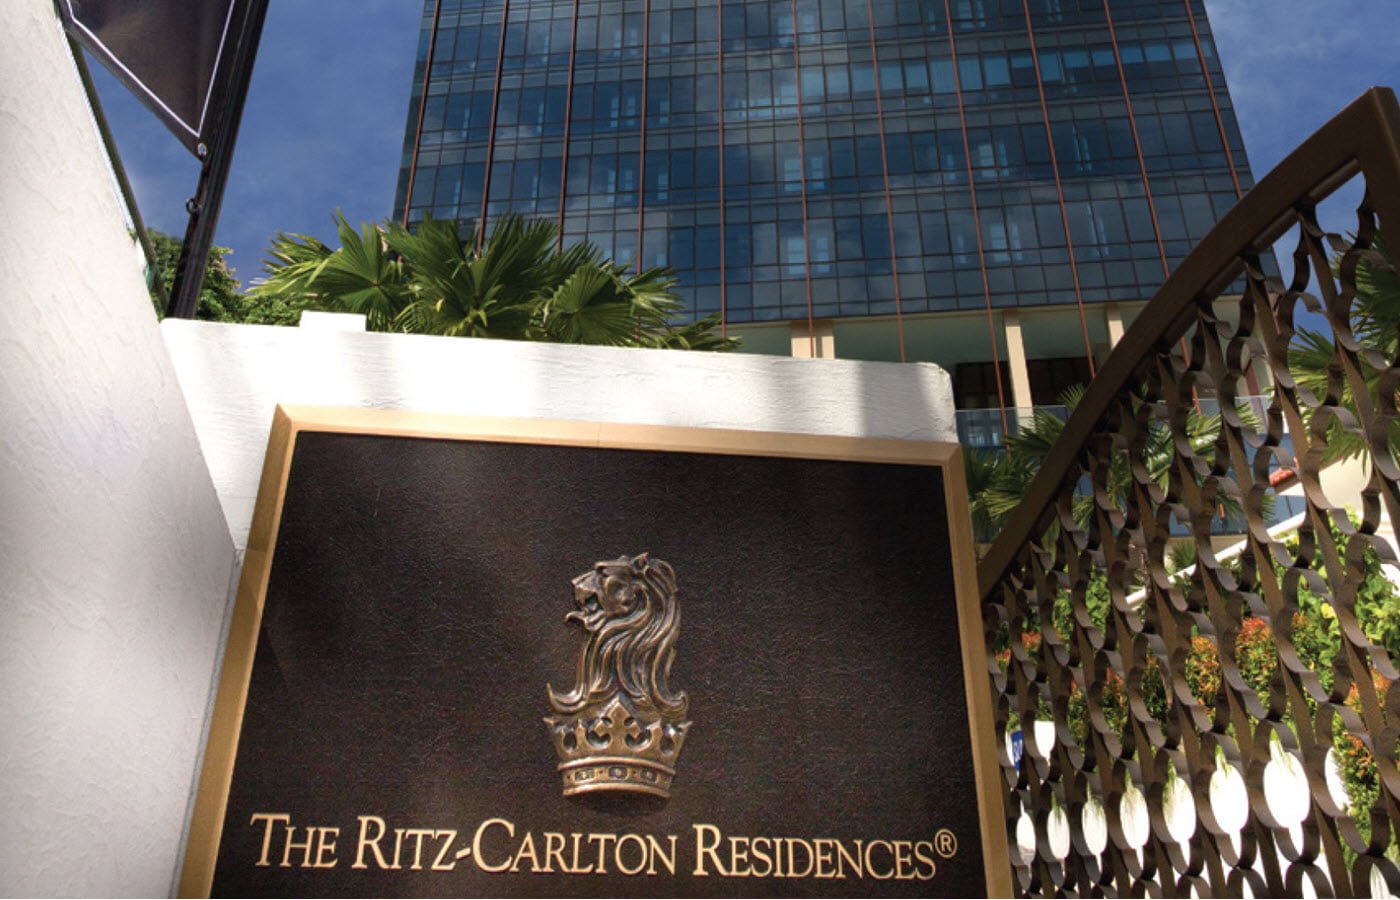 THE RITZ-CARLTON RESIDENCES